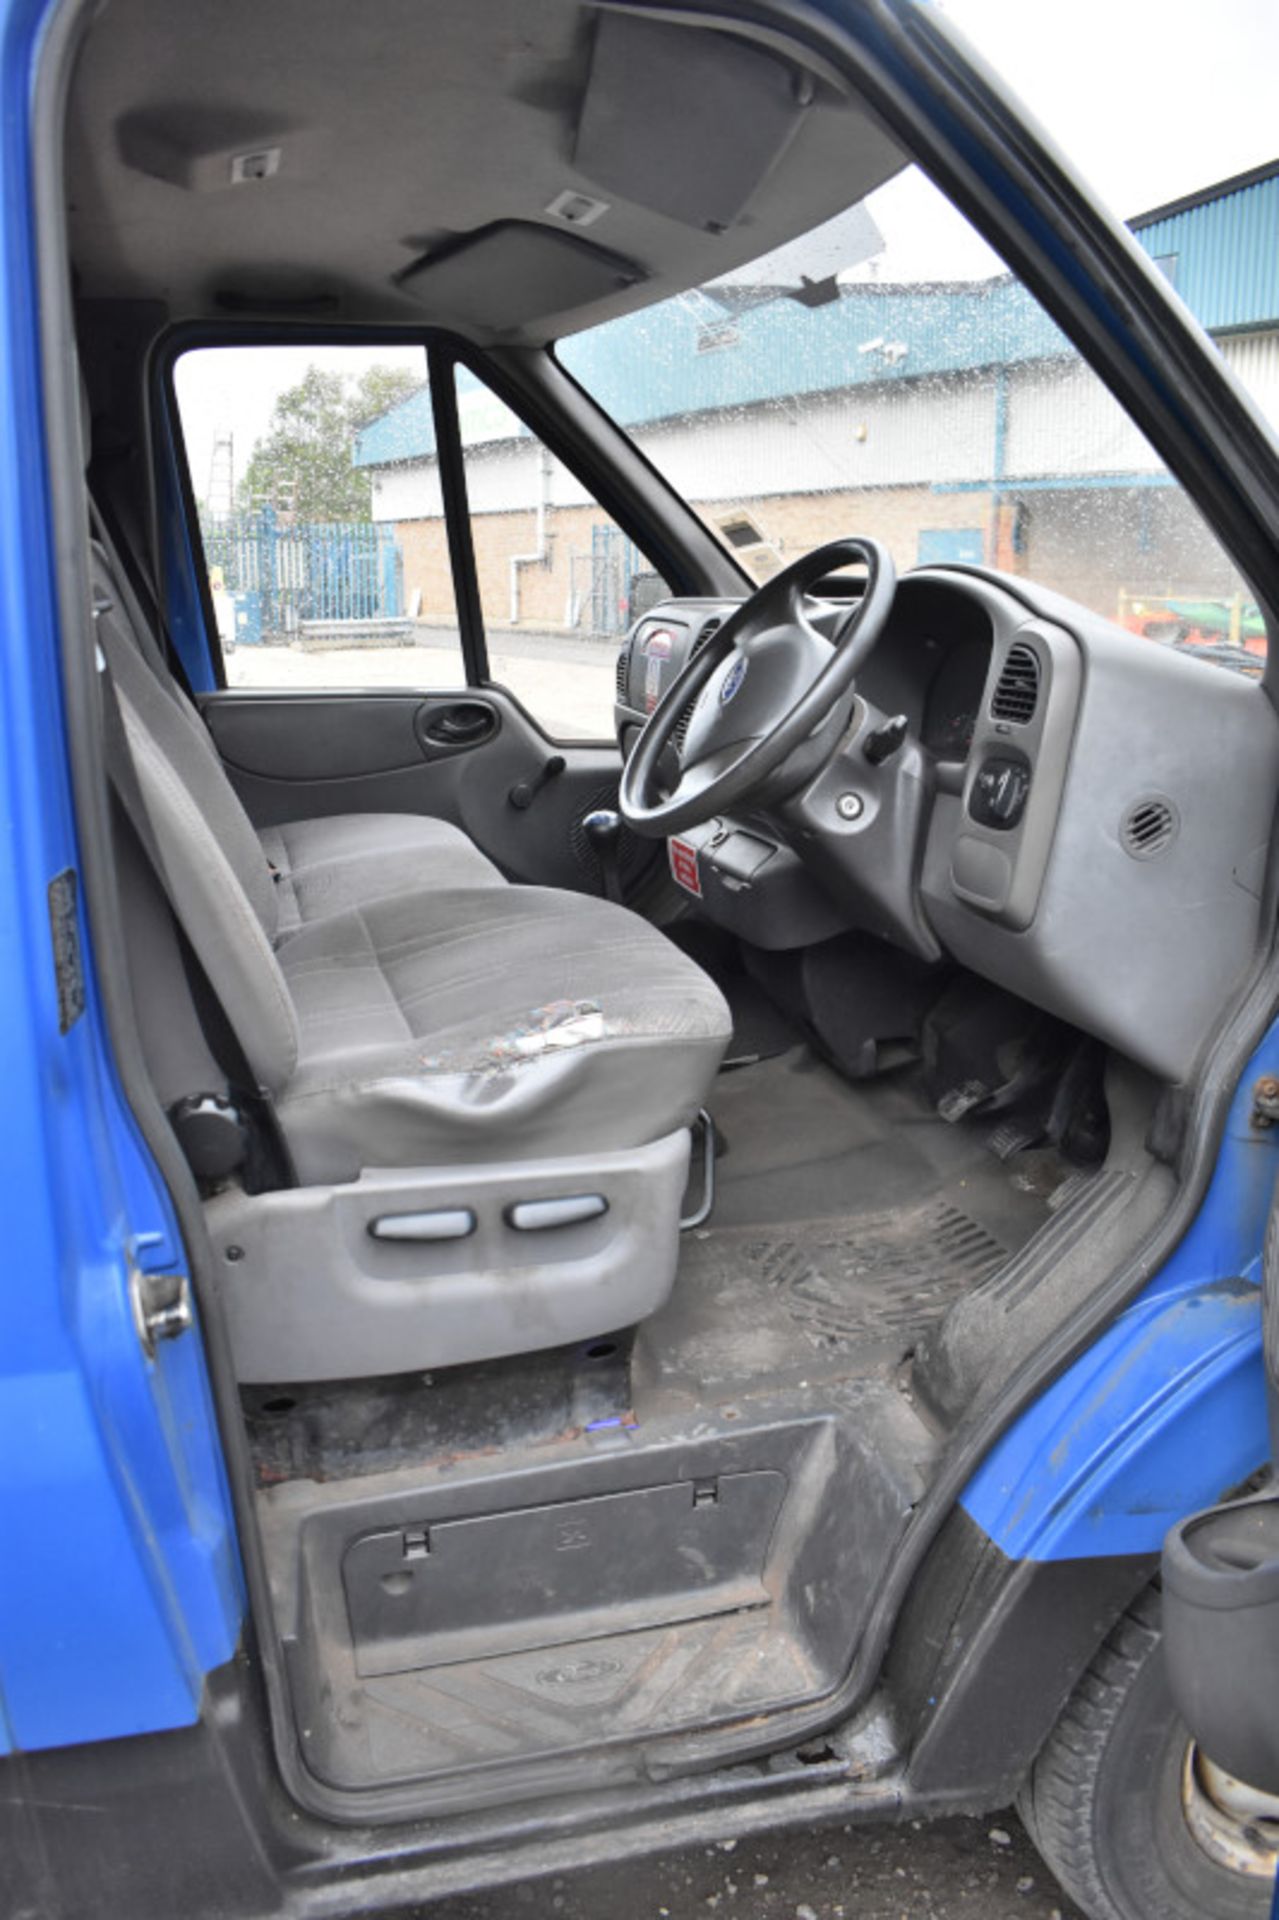 Ford Transit Van - MF54 0LX - 350 LWB - 2-axle rigid body - 3500kg gross - 2402CC - 3 seat - Image 15 of 37